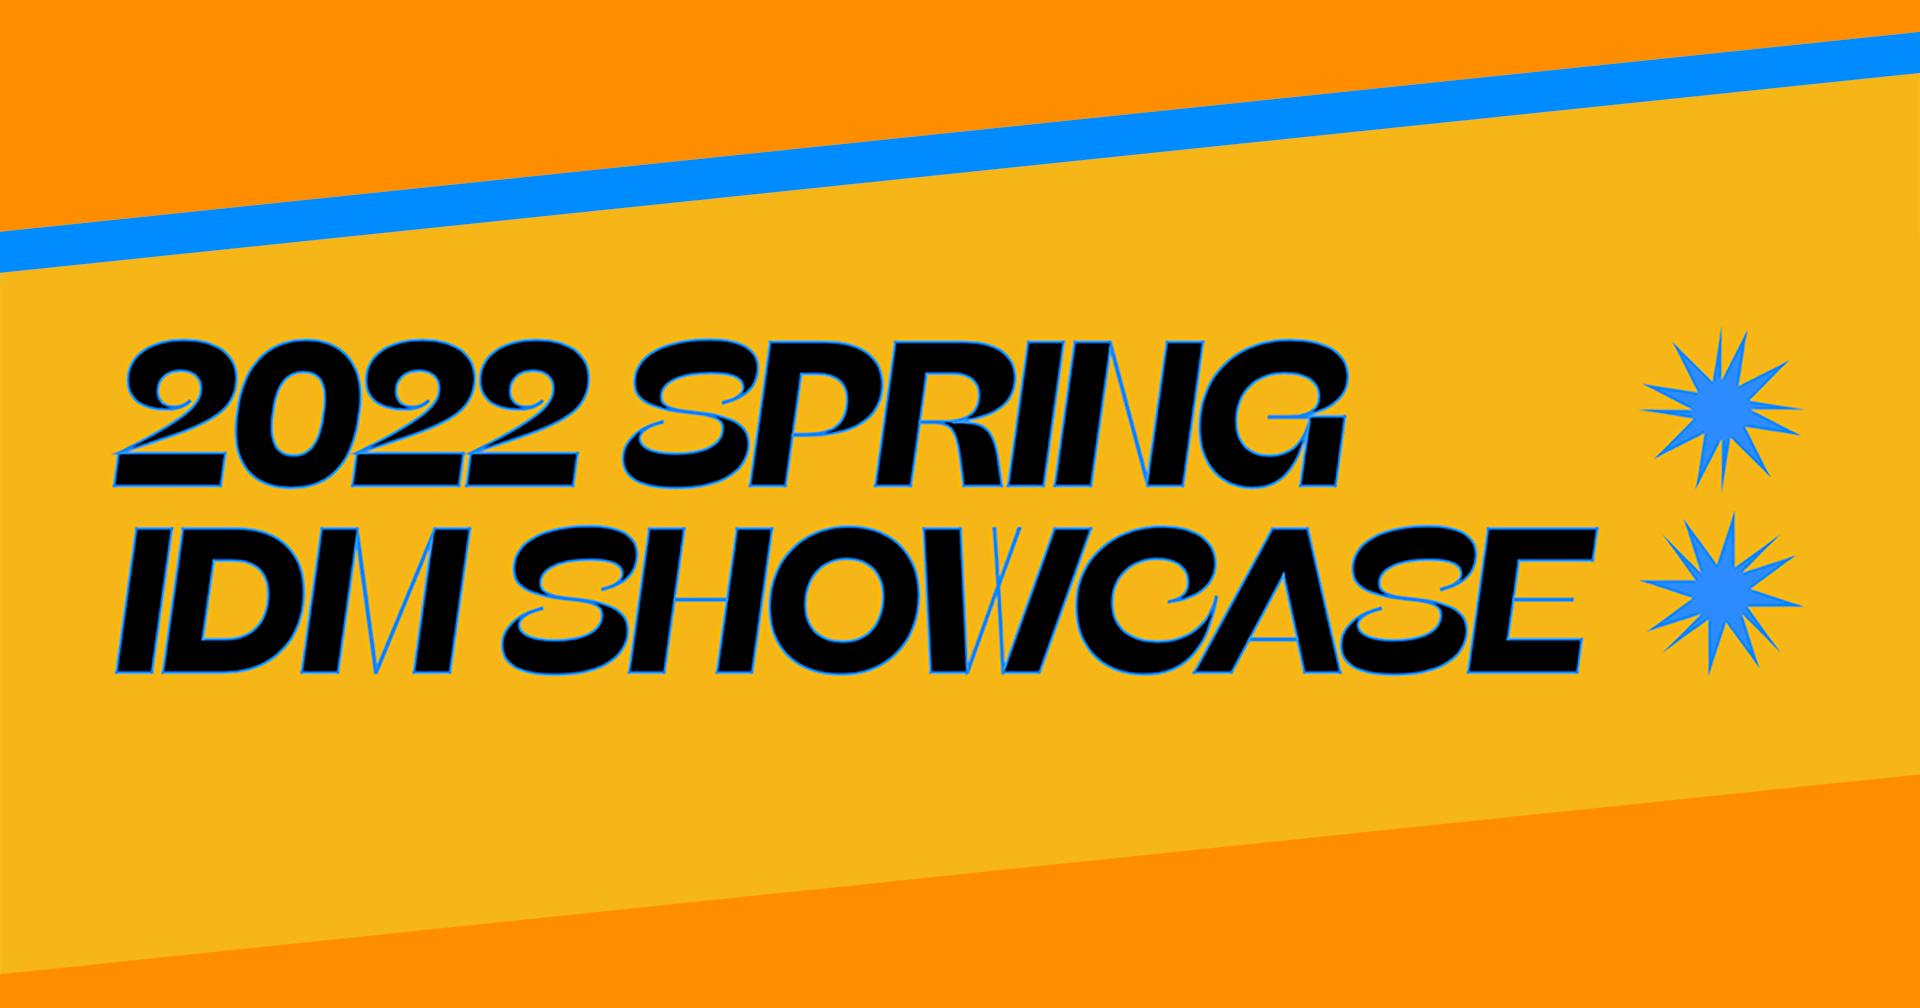 Spring 2022 Showcase banner